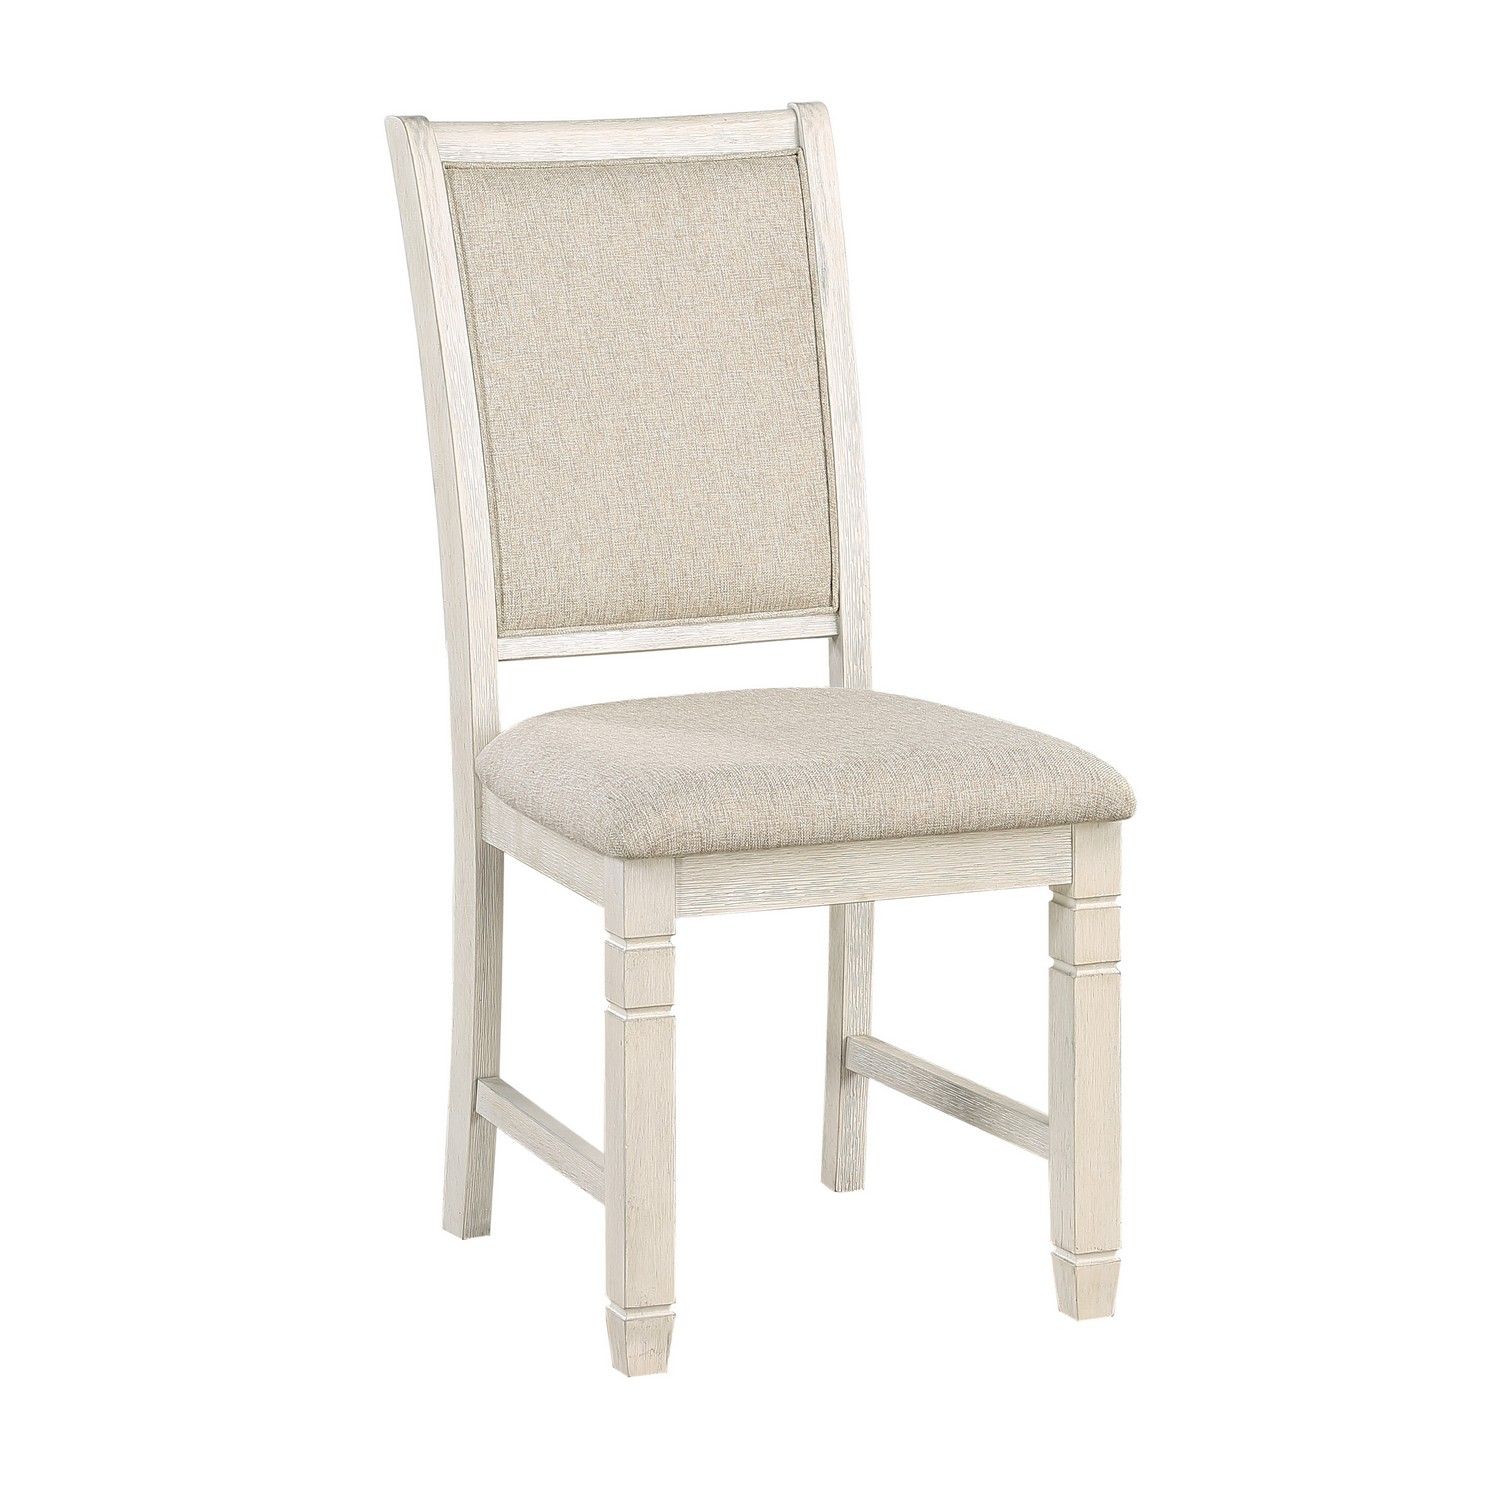 Homelegance Asher Side Chair - Antique White